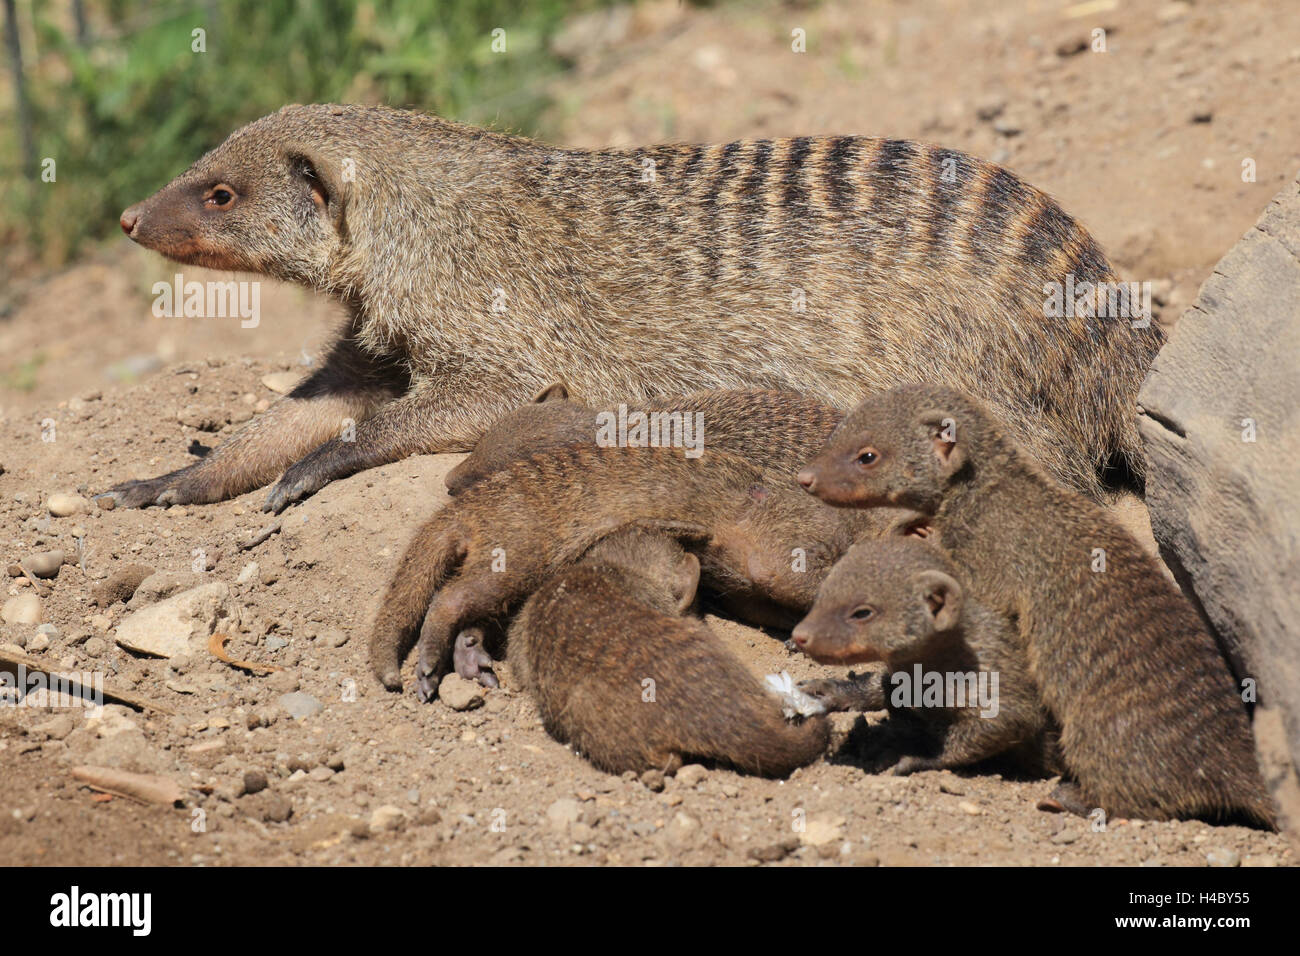 Banded mongoose with young animals, Mungos mungo Stock Photo